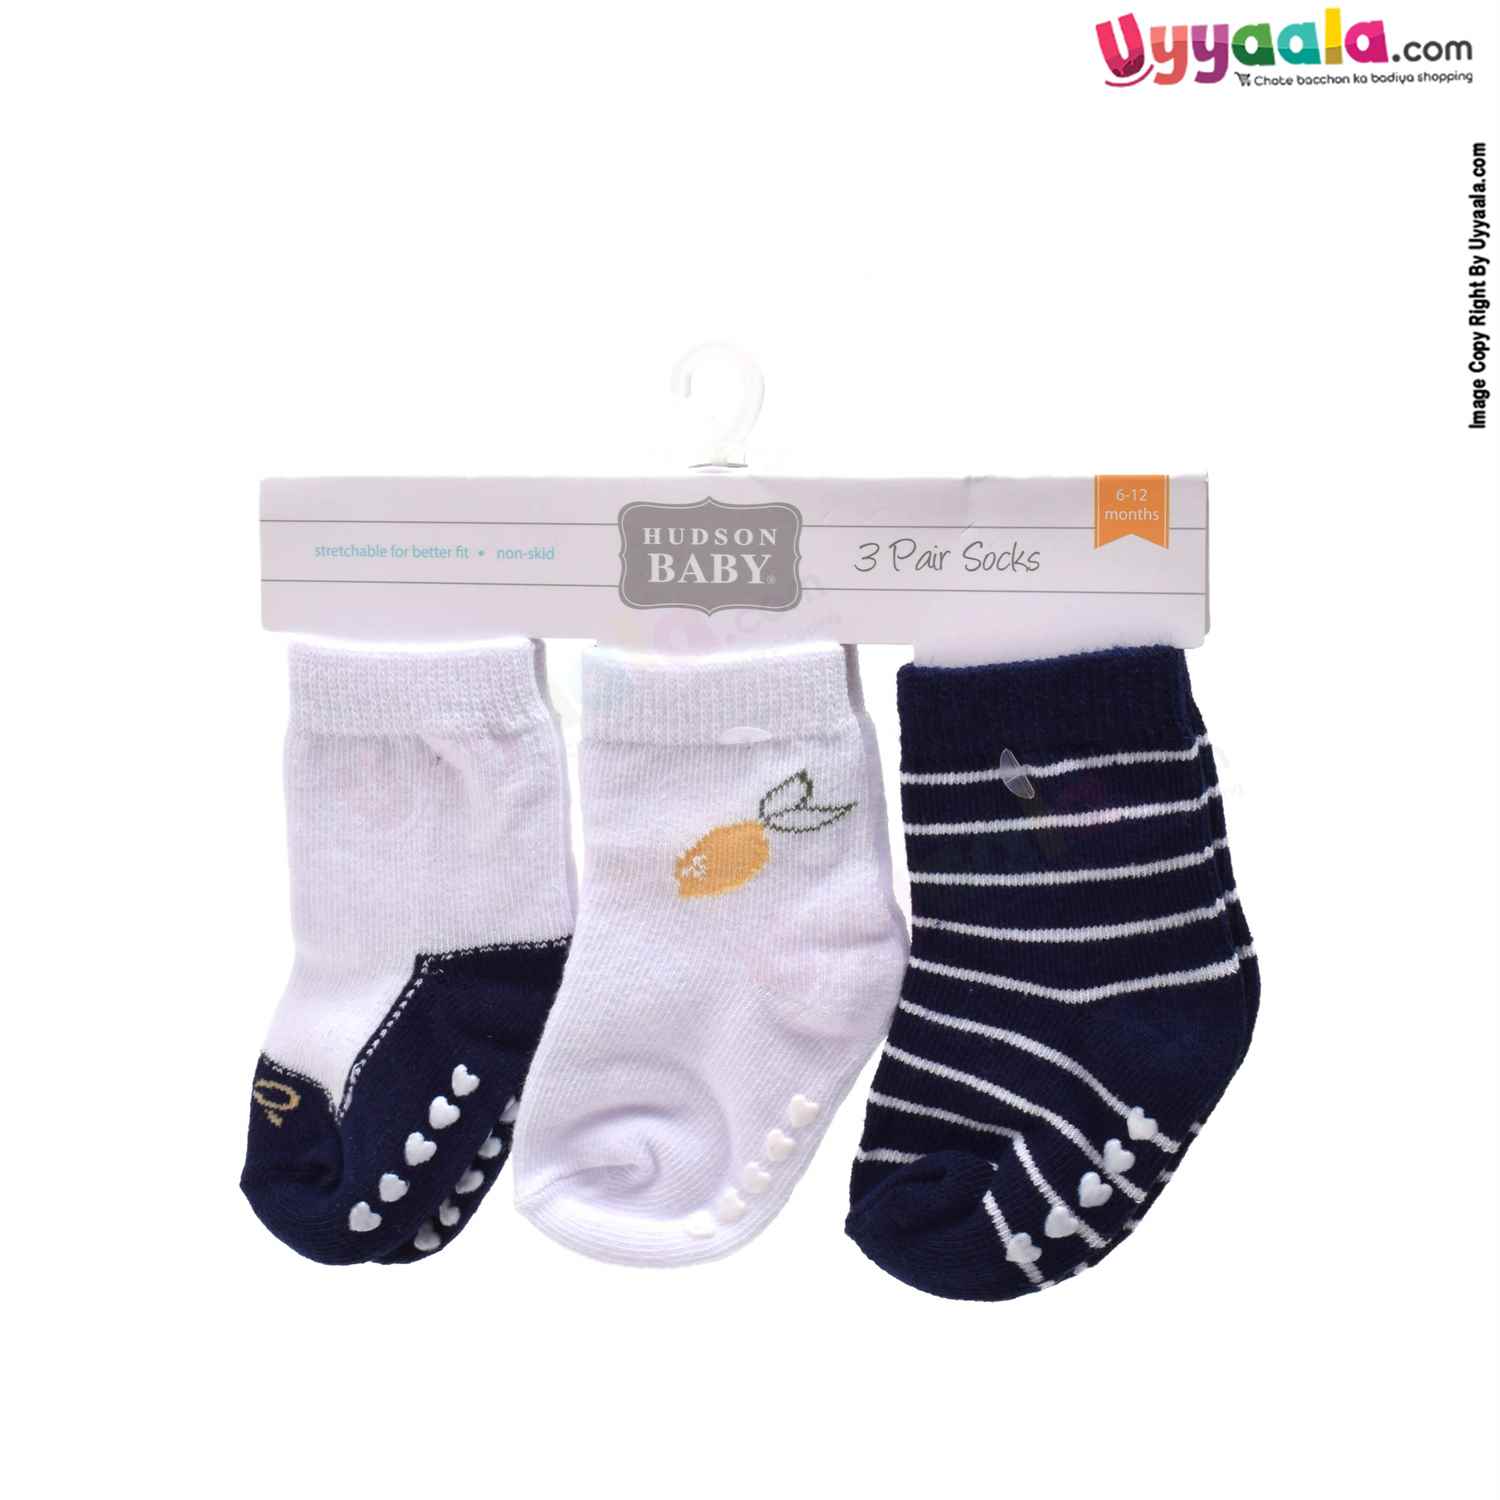 HUDSON BABY Stretchable & Non Skid Socks 3p Set with Multi Print, 6-12 m Age- Navy Blue & White